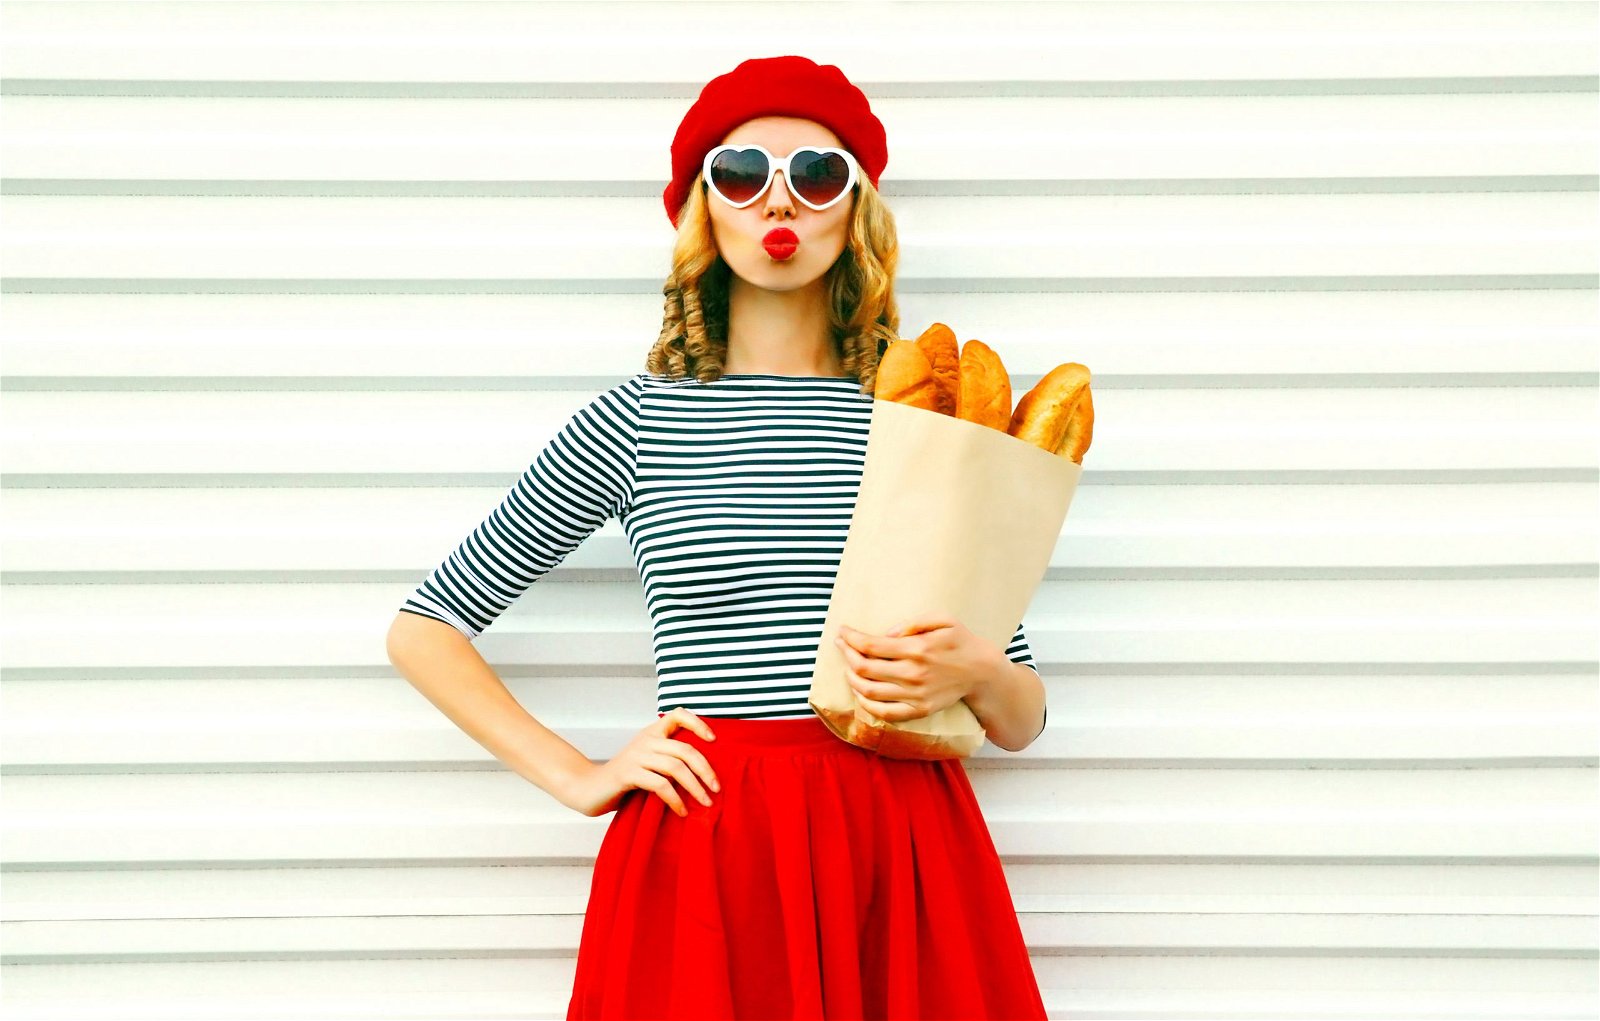 donna con basco rosso francese e baguette